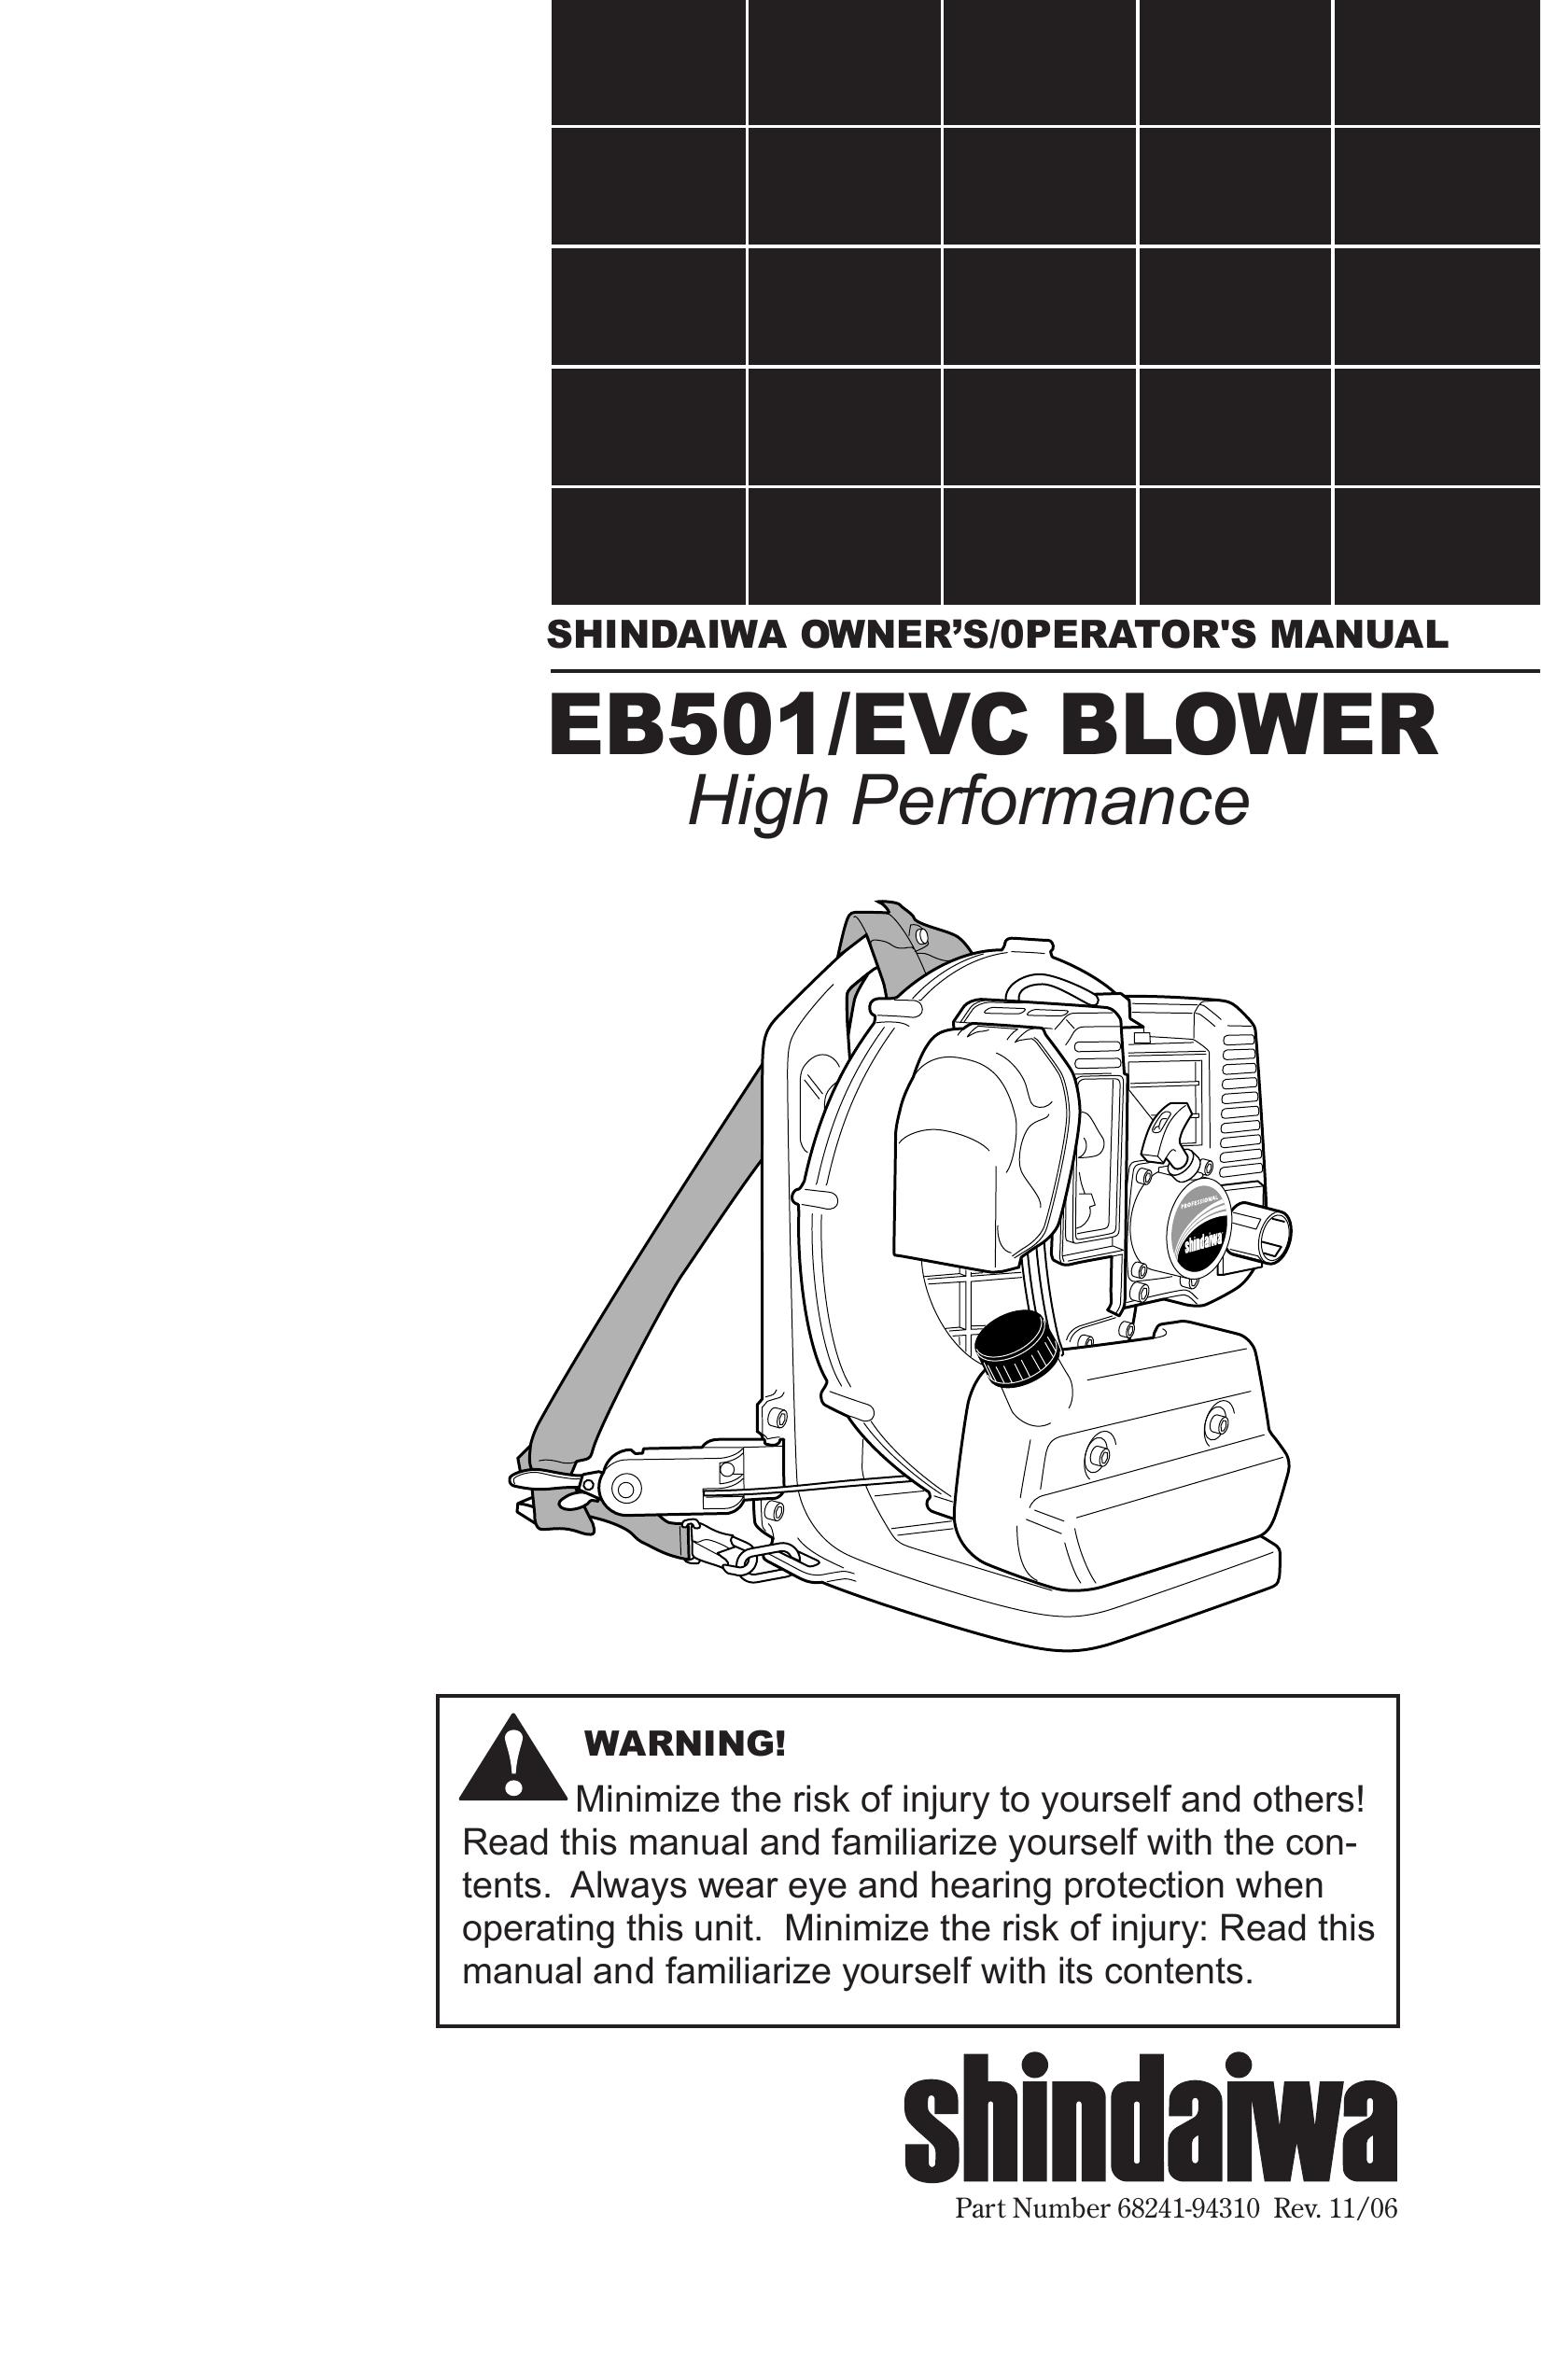 Shindaiwa EB501/EVC Blower User Manual